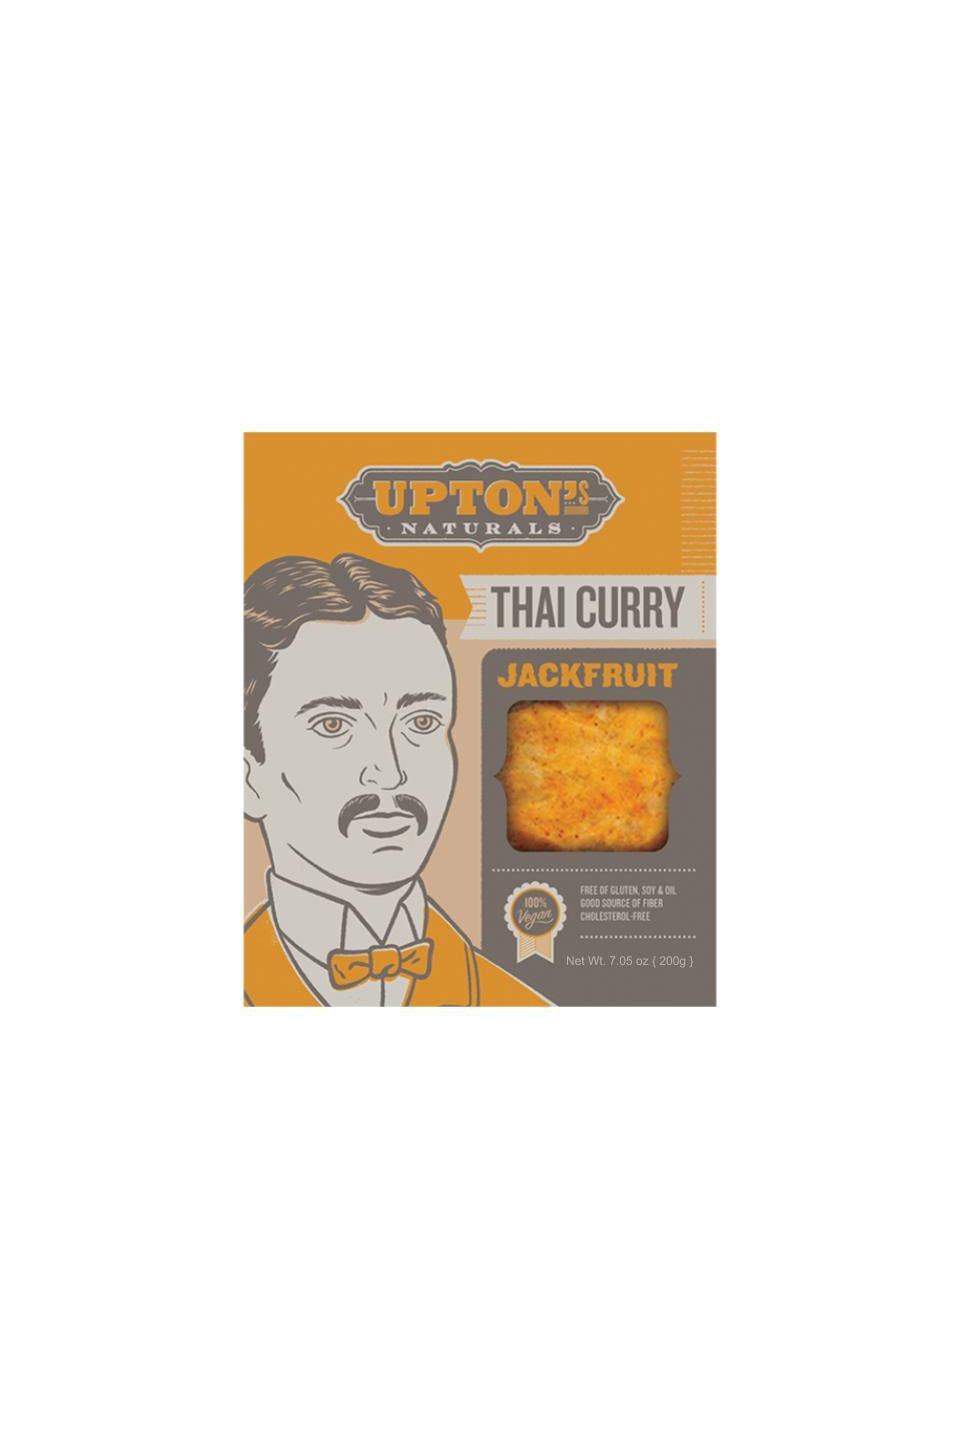 Upton's Naturals Thai Curry Jackfruit 200g